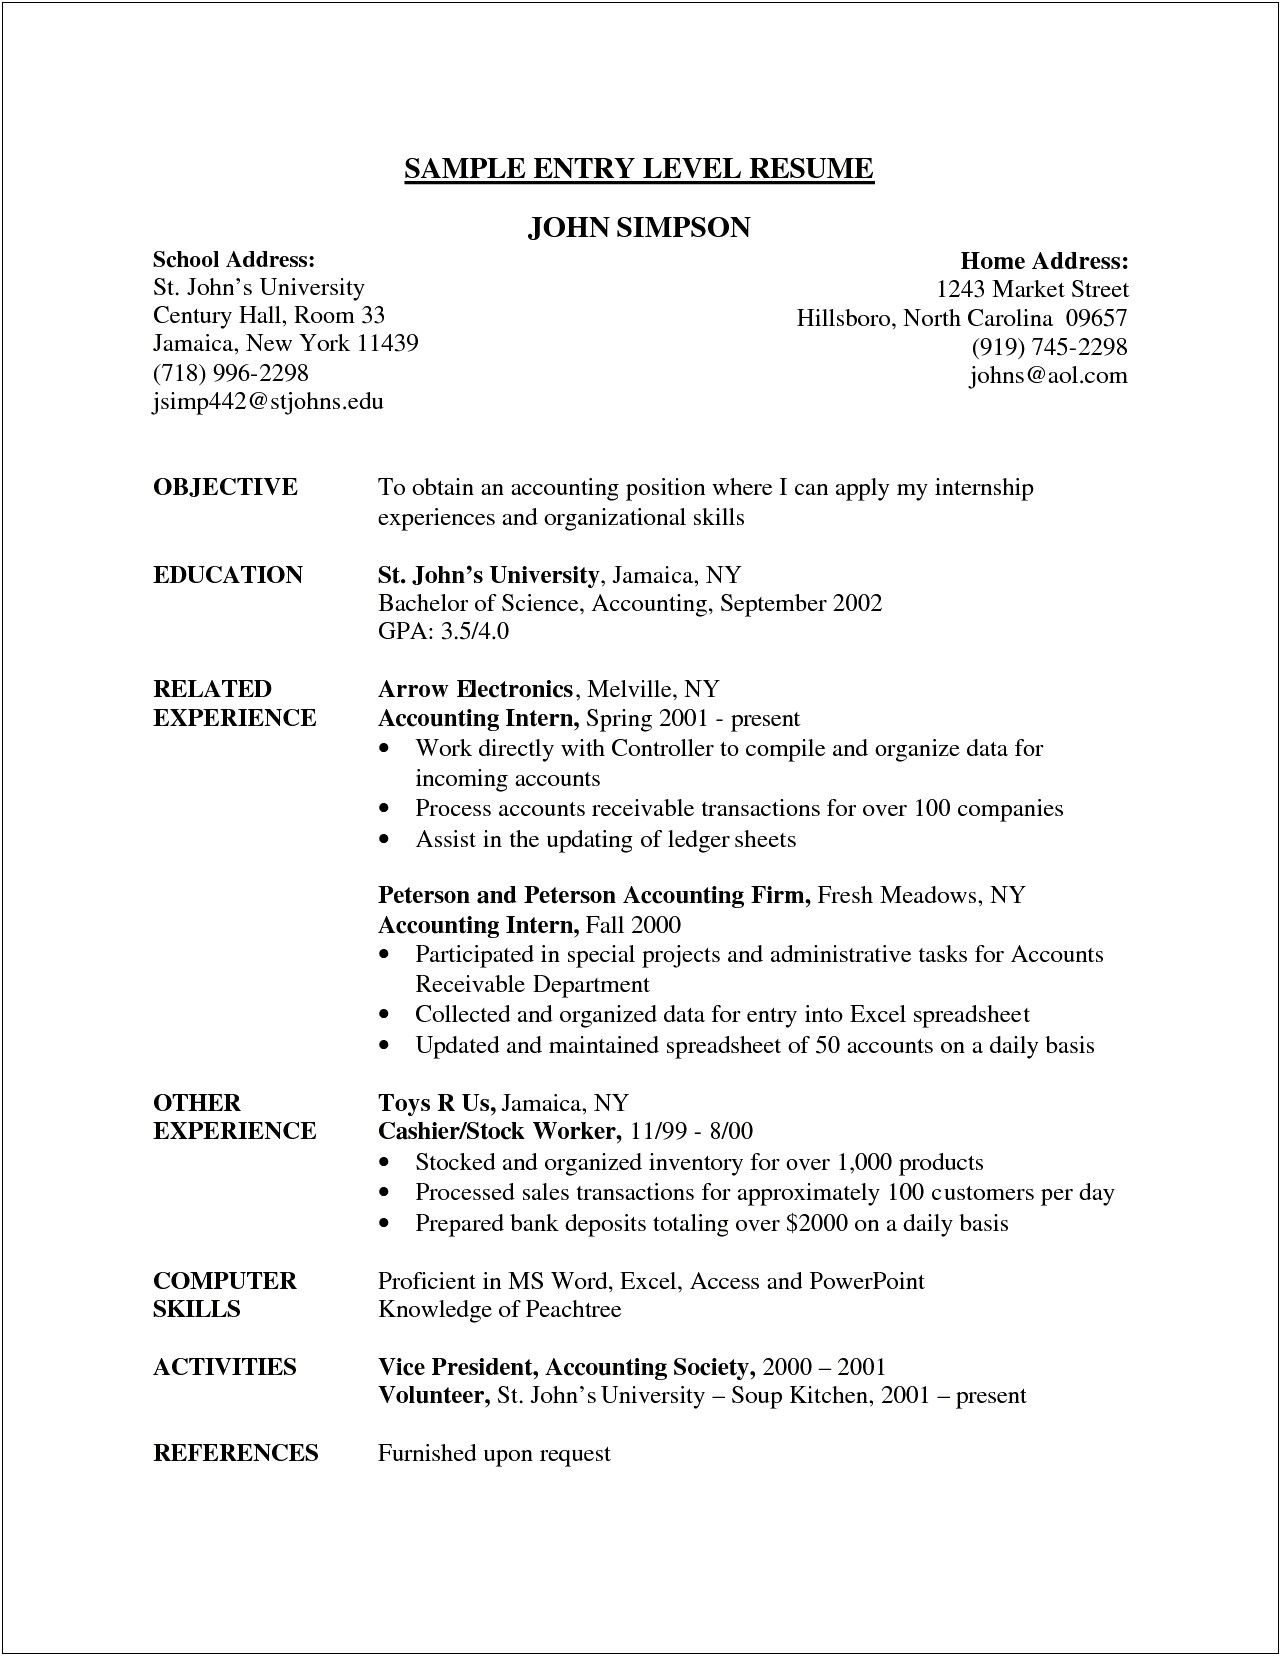 Resume Summary For Entry Level Firefighter